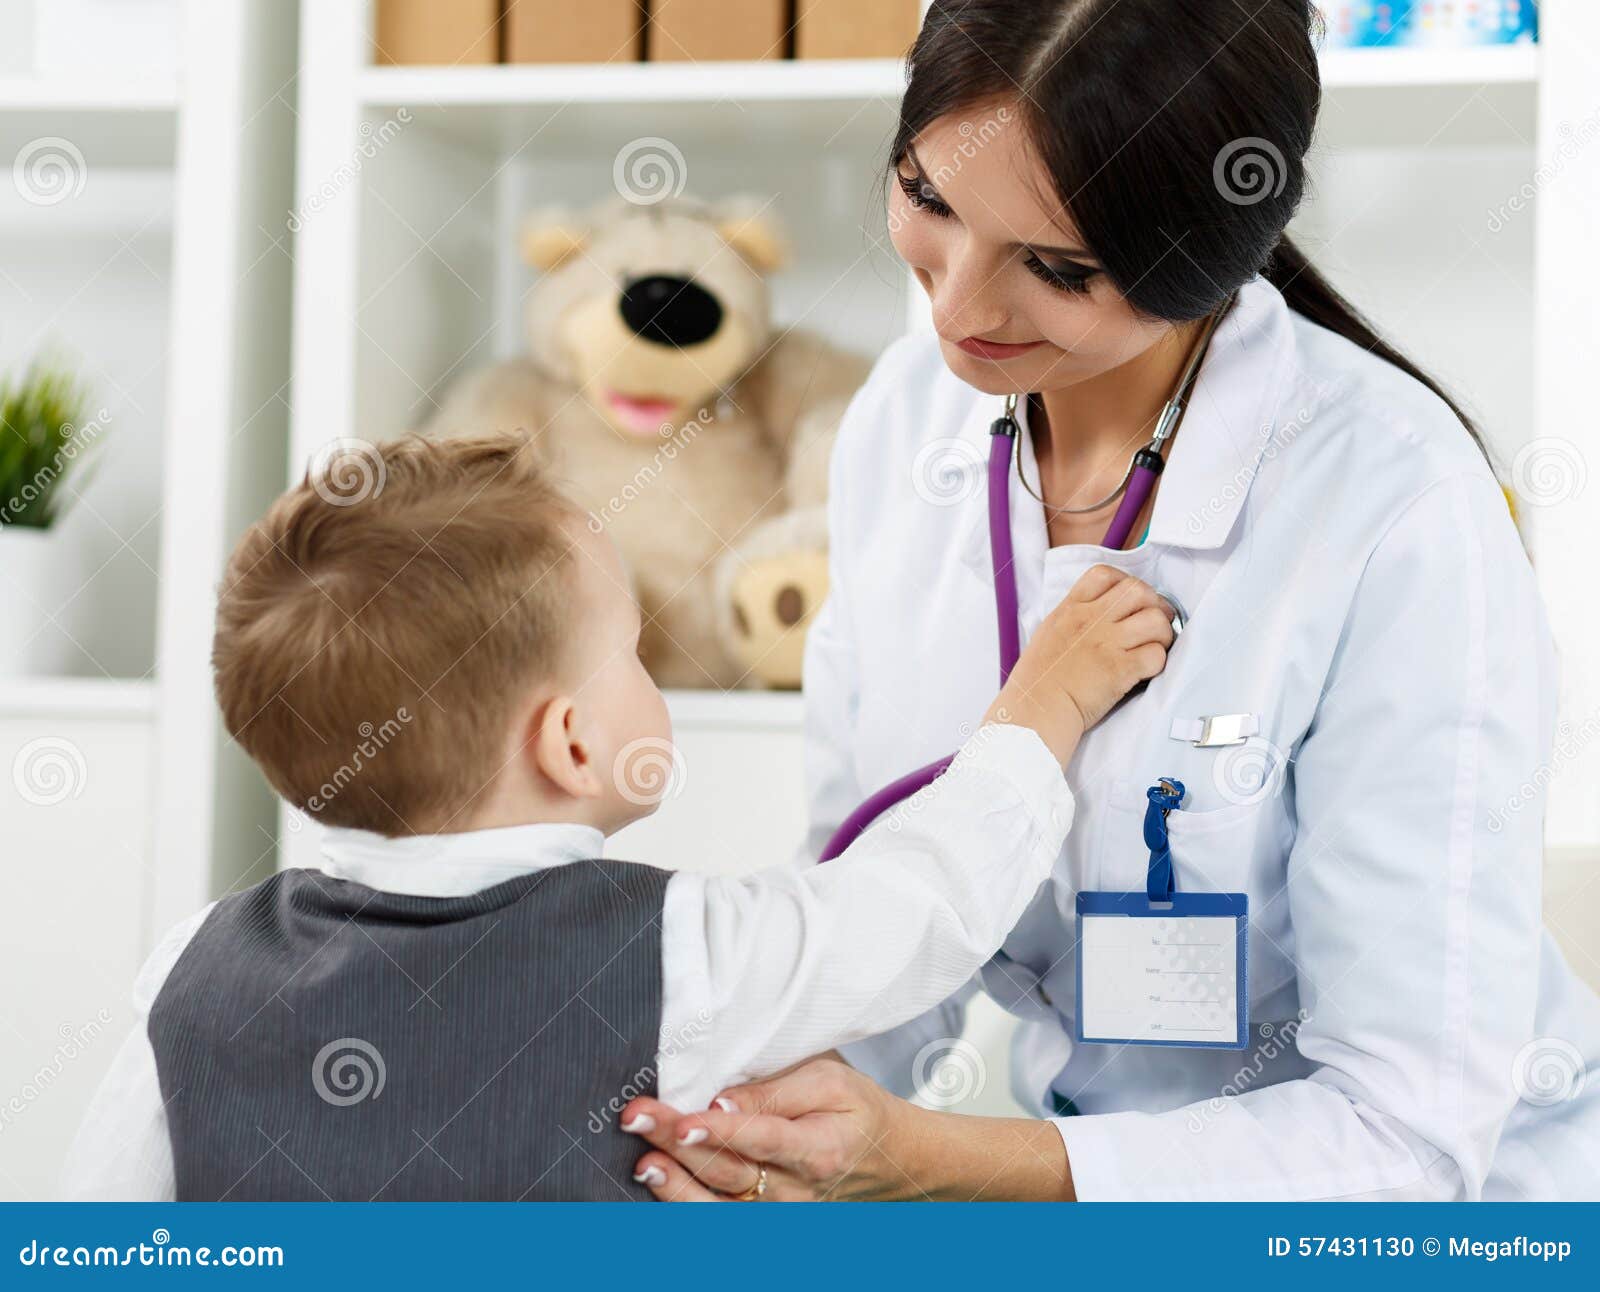 paediatrics medical concept